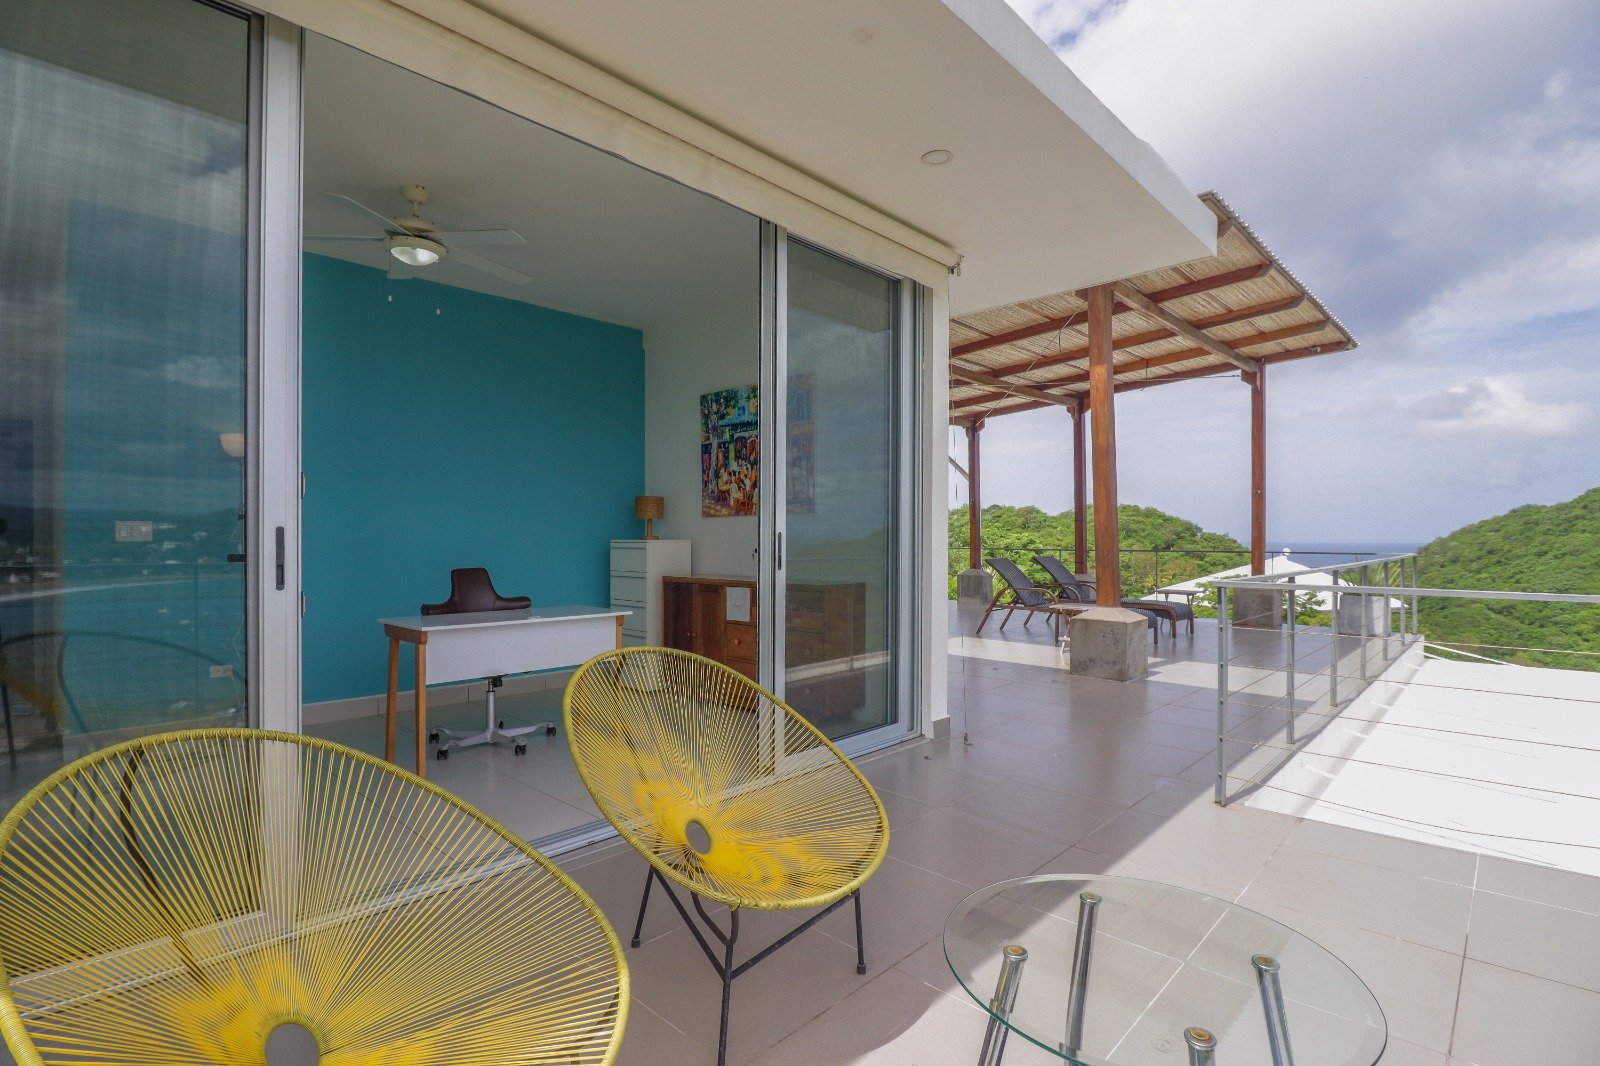 Two bedroom ocean view home for sale property real estate San Juan Del Sur (9).jpeg